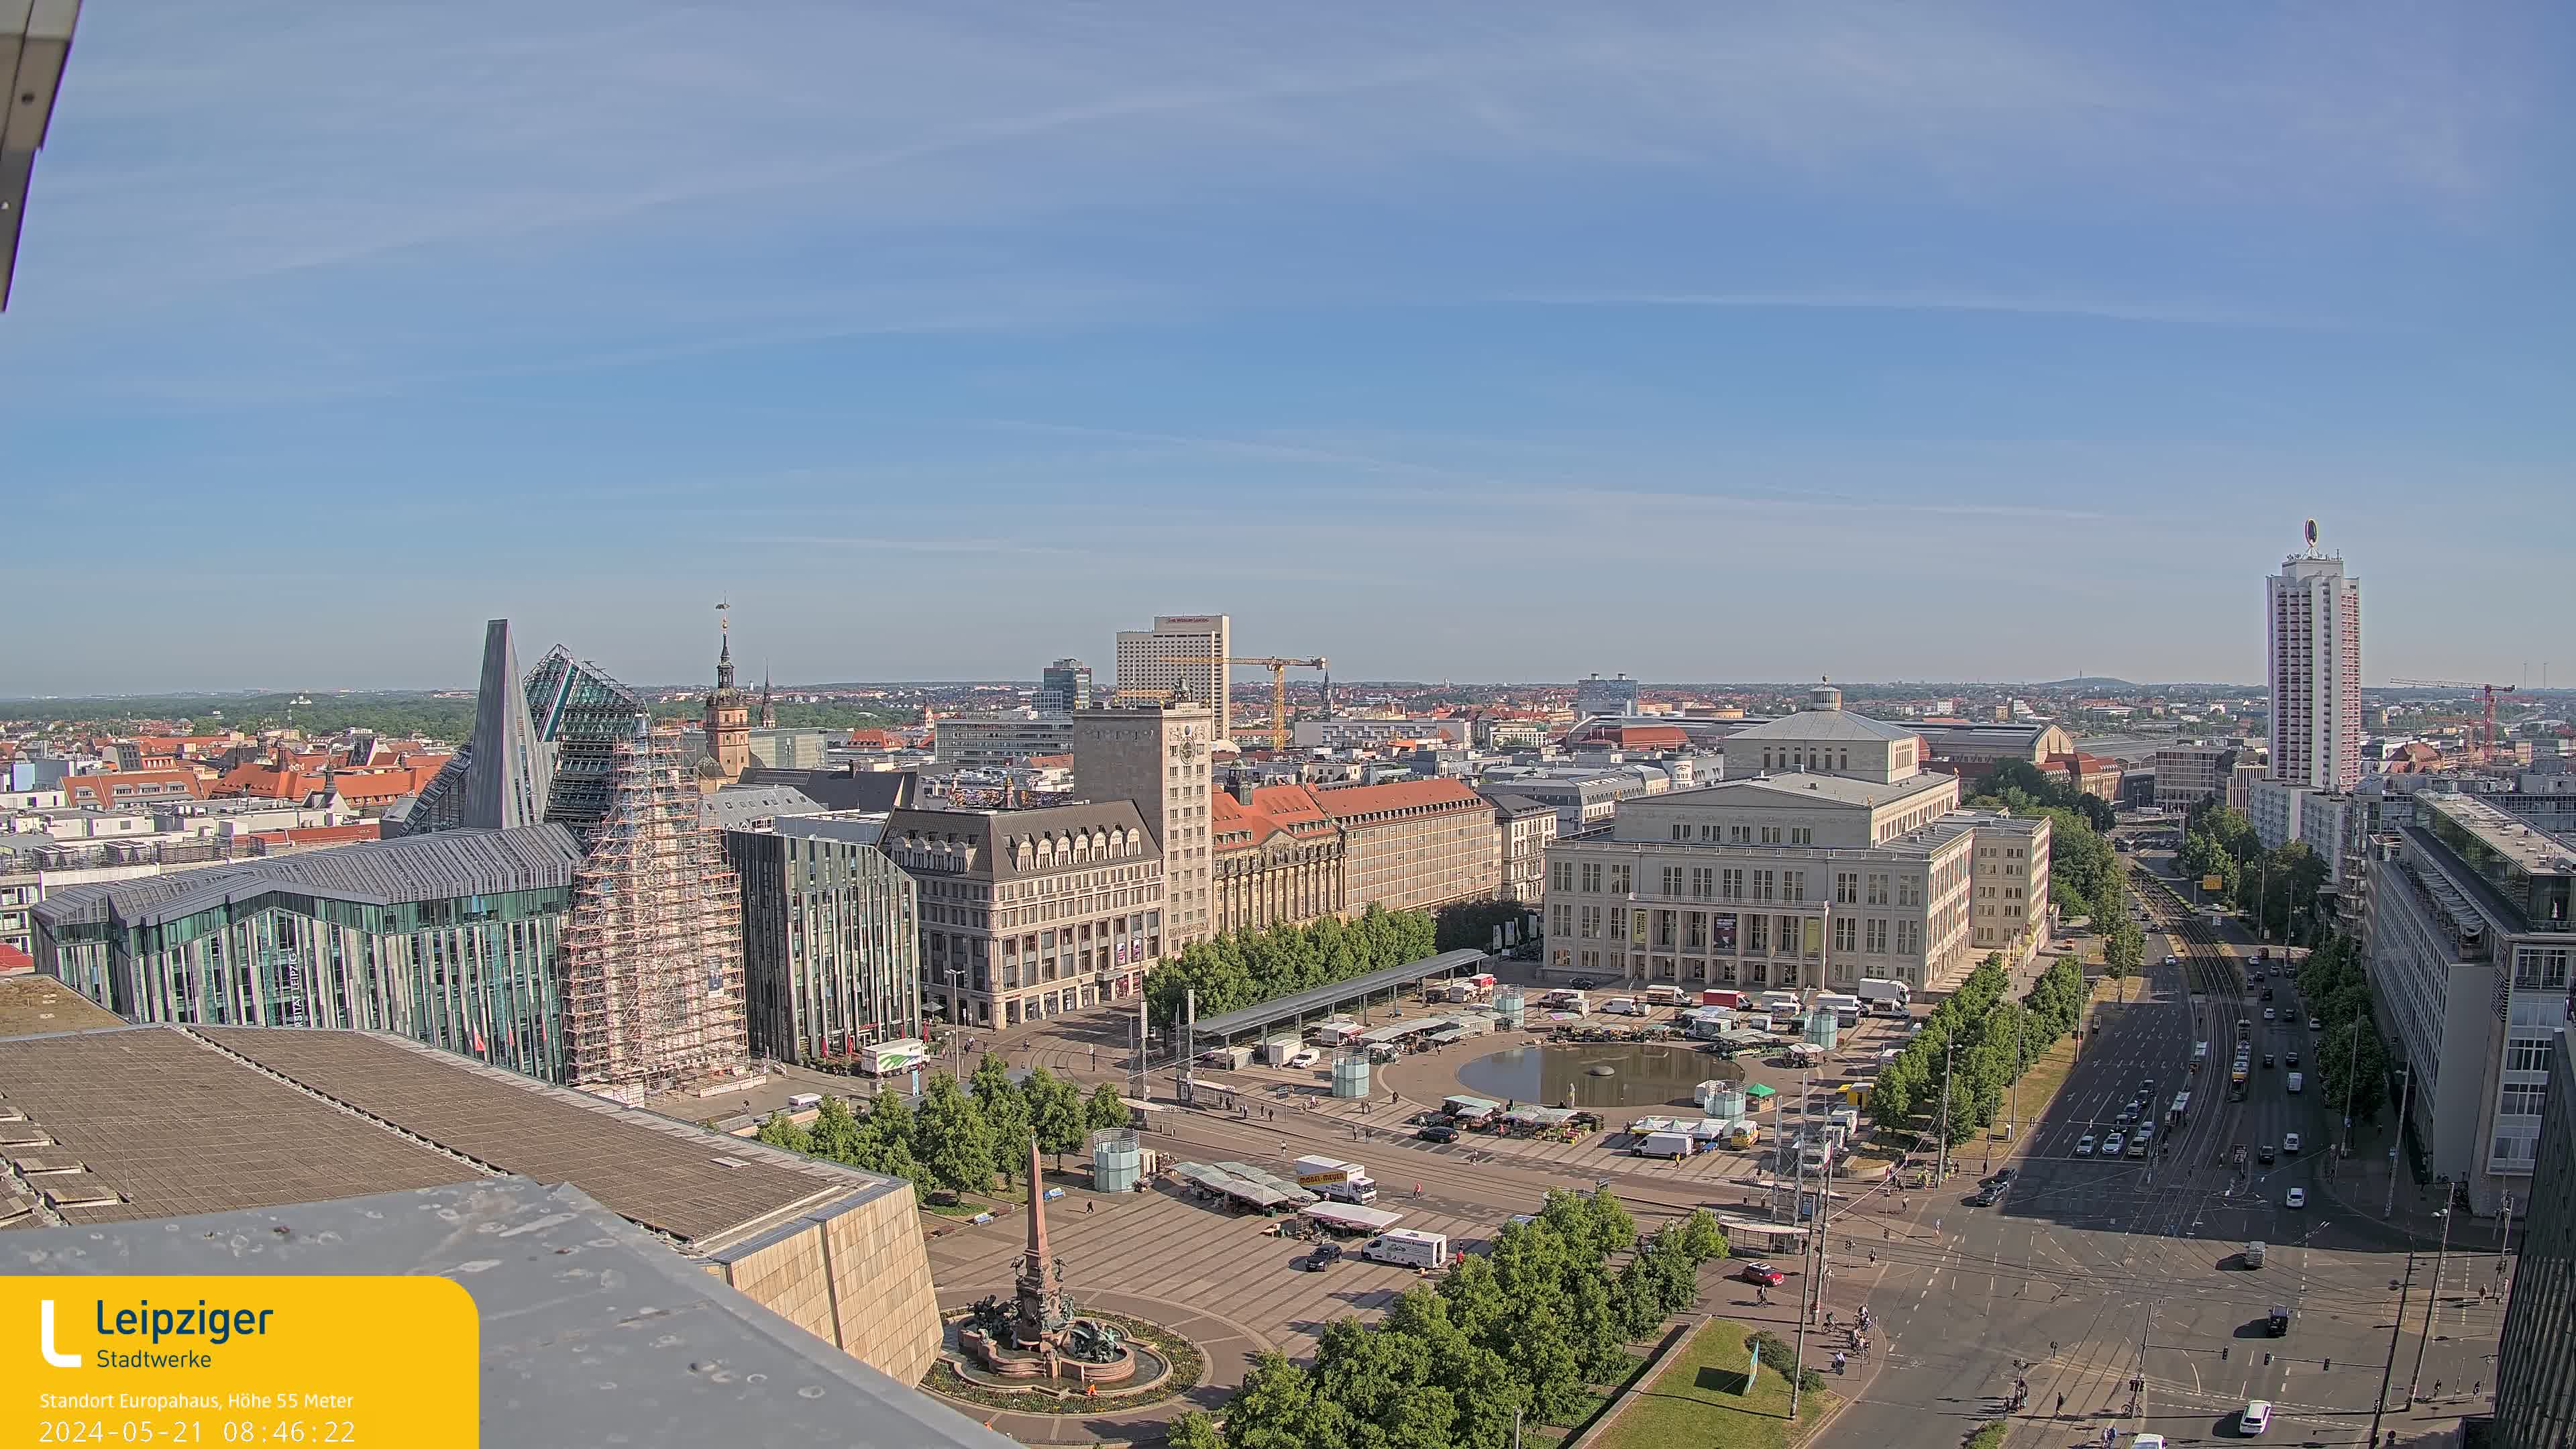 Leipzig Fre. 08:46